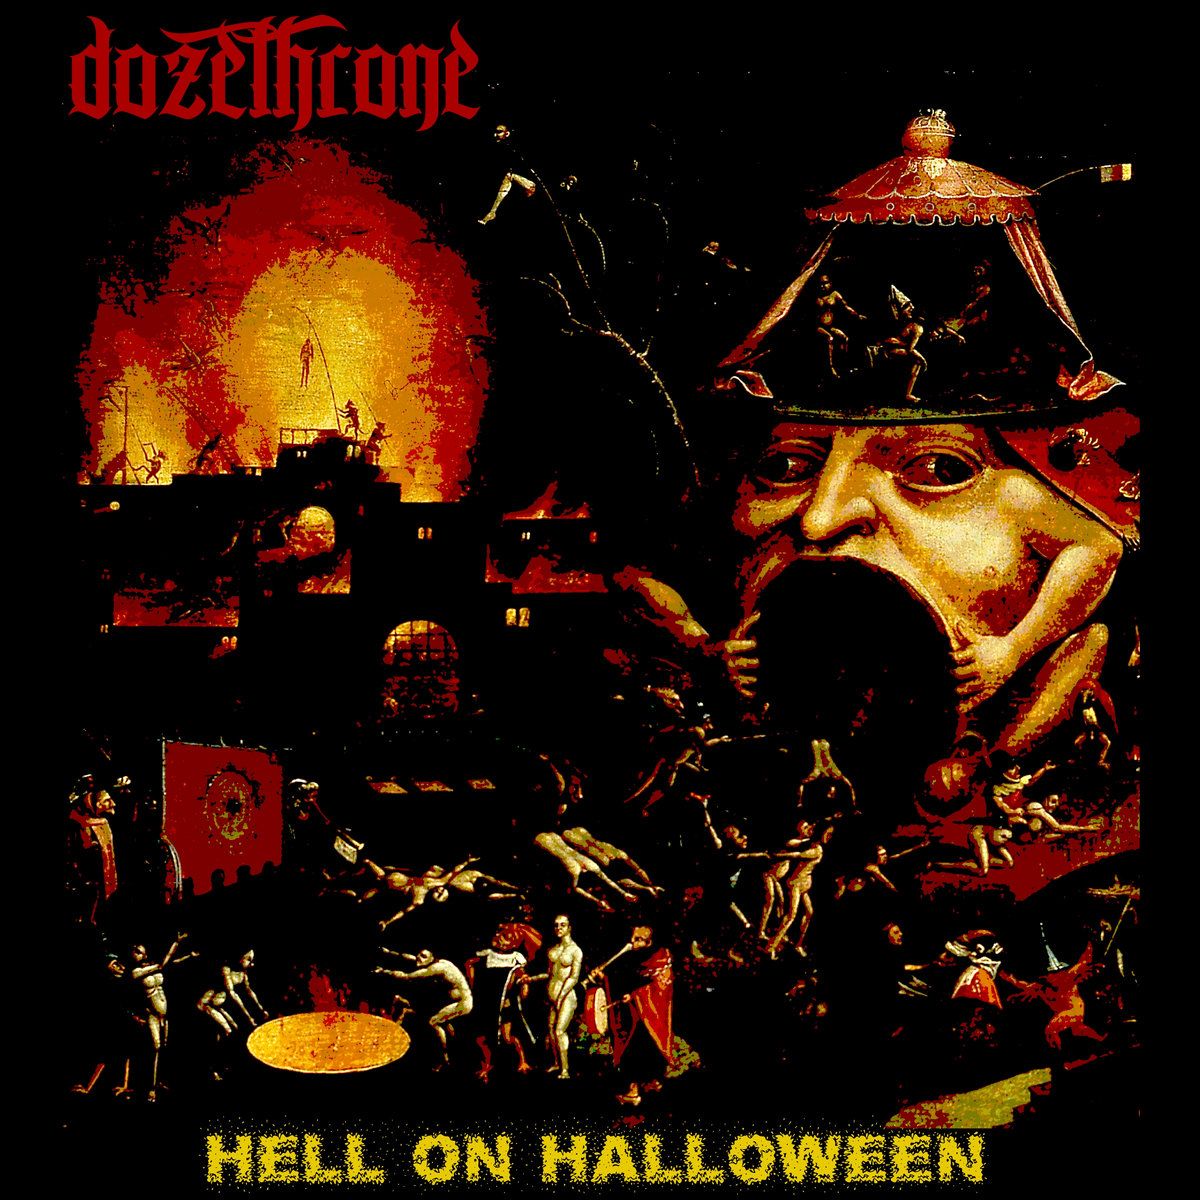 DOZETHRONE - Hell On Halloween cover 